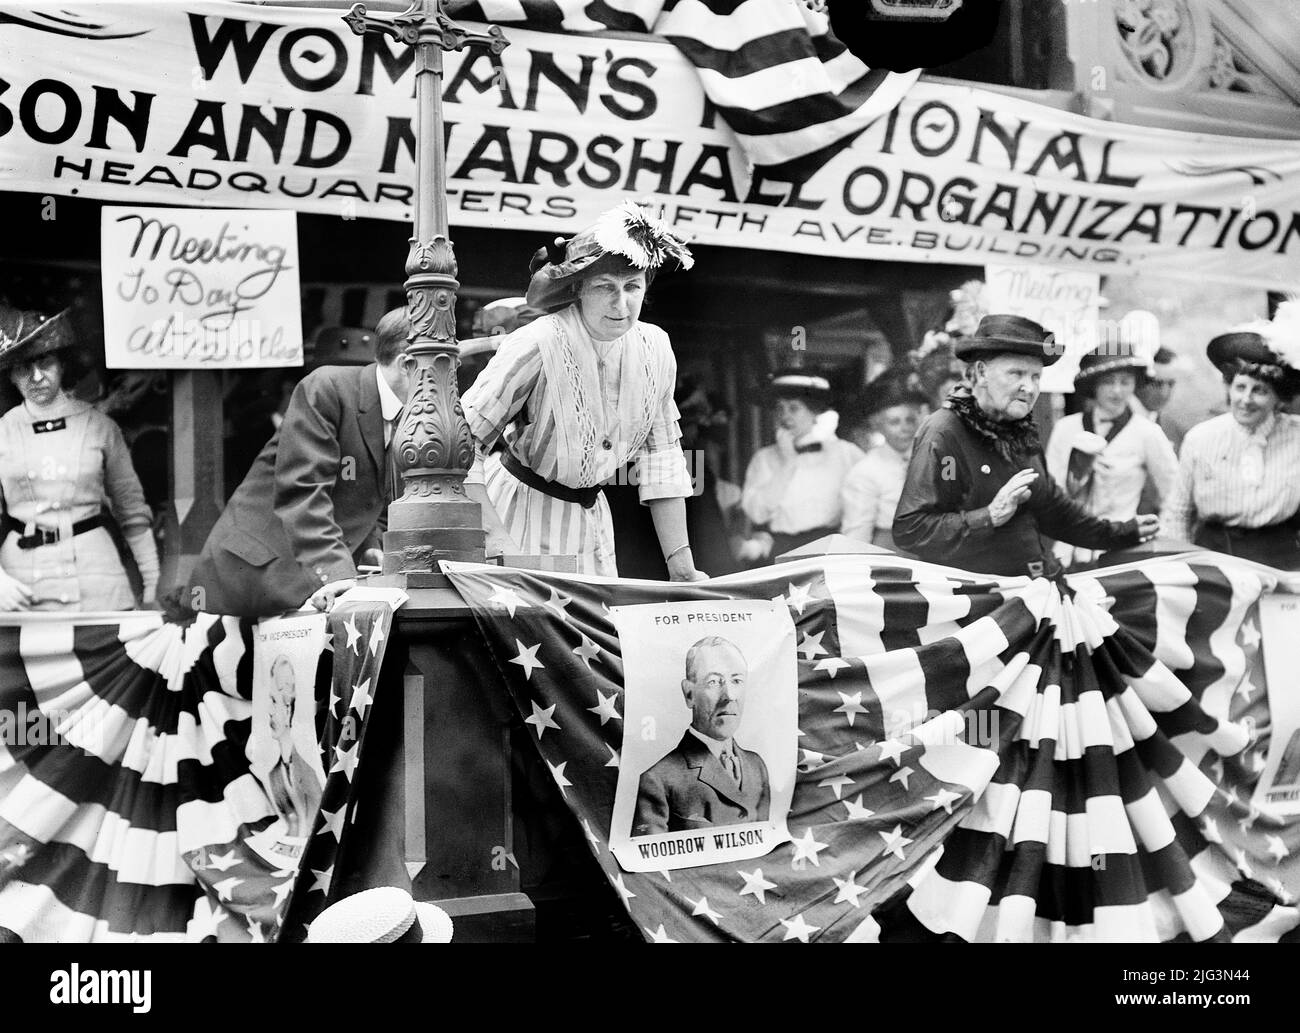 Florence Jaffrey 'Daisy' Harriman, President of Woman's National Wilson and Marshall Organization, attending Democratic Rally, Union Square, New York City, New York, USA, Bain News Service, August 20, 1912 Stock Photo